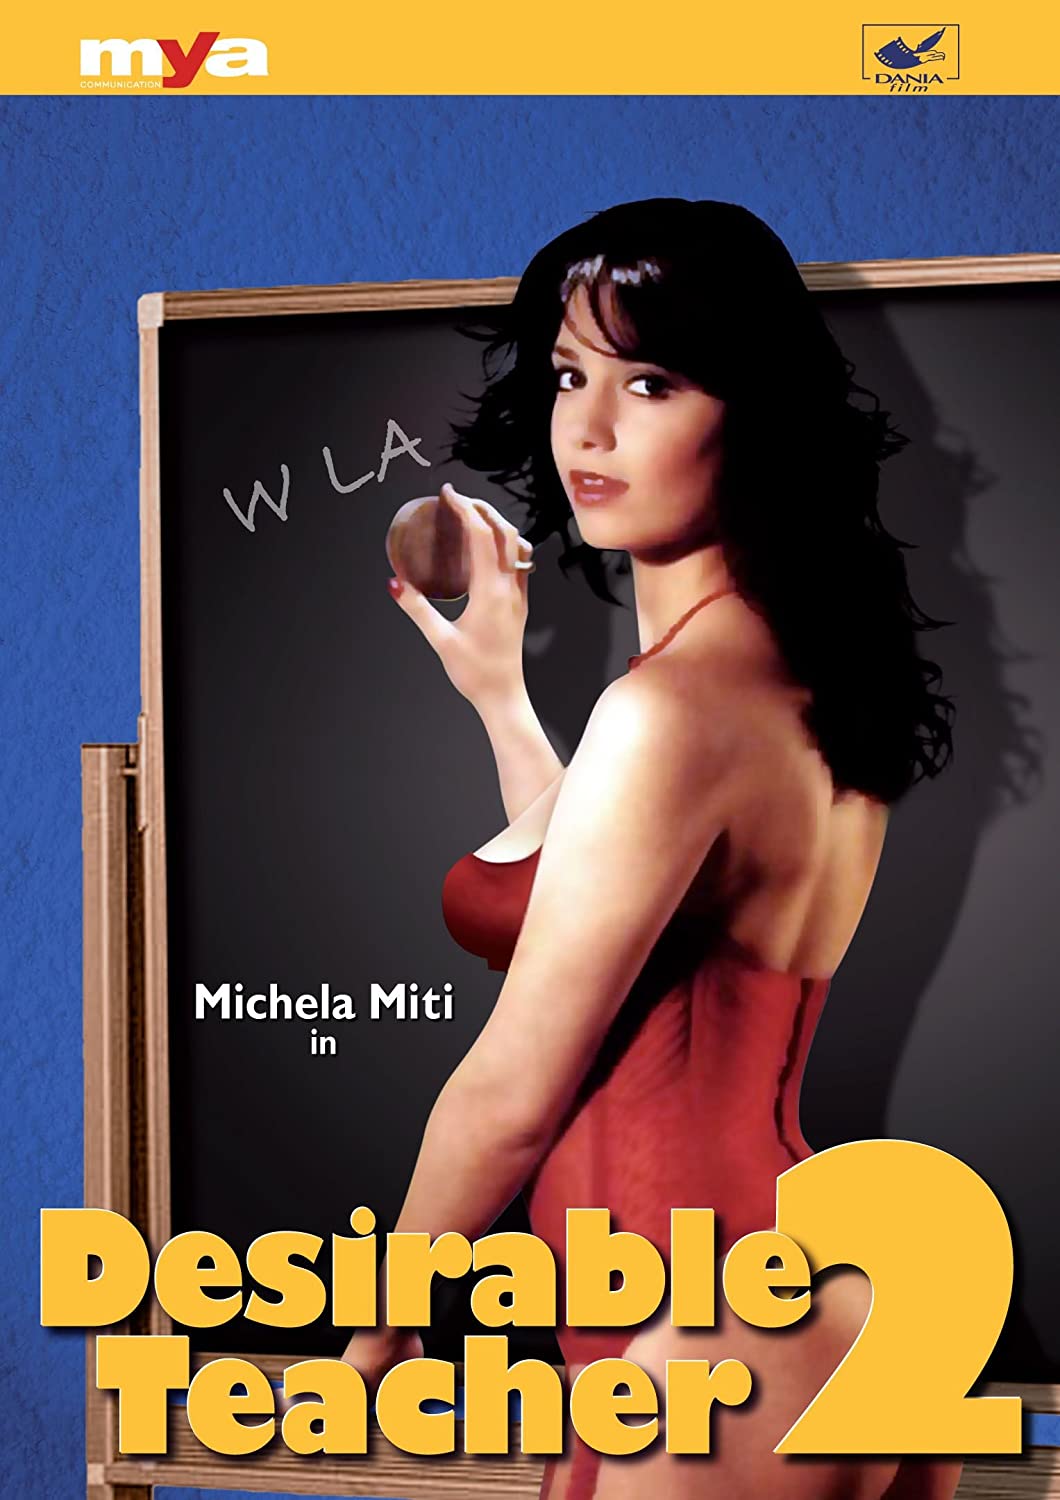 Desirable Teacher 2 poster